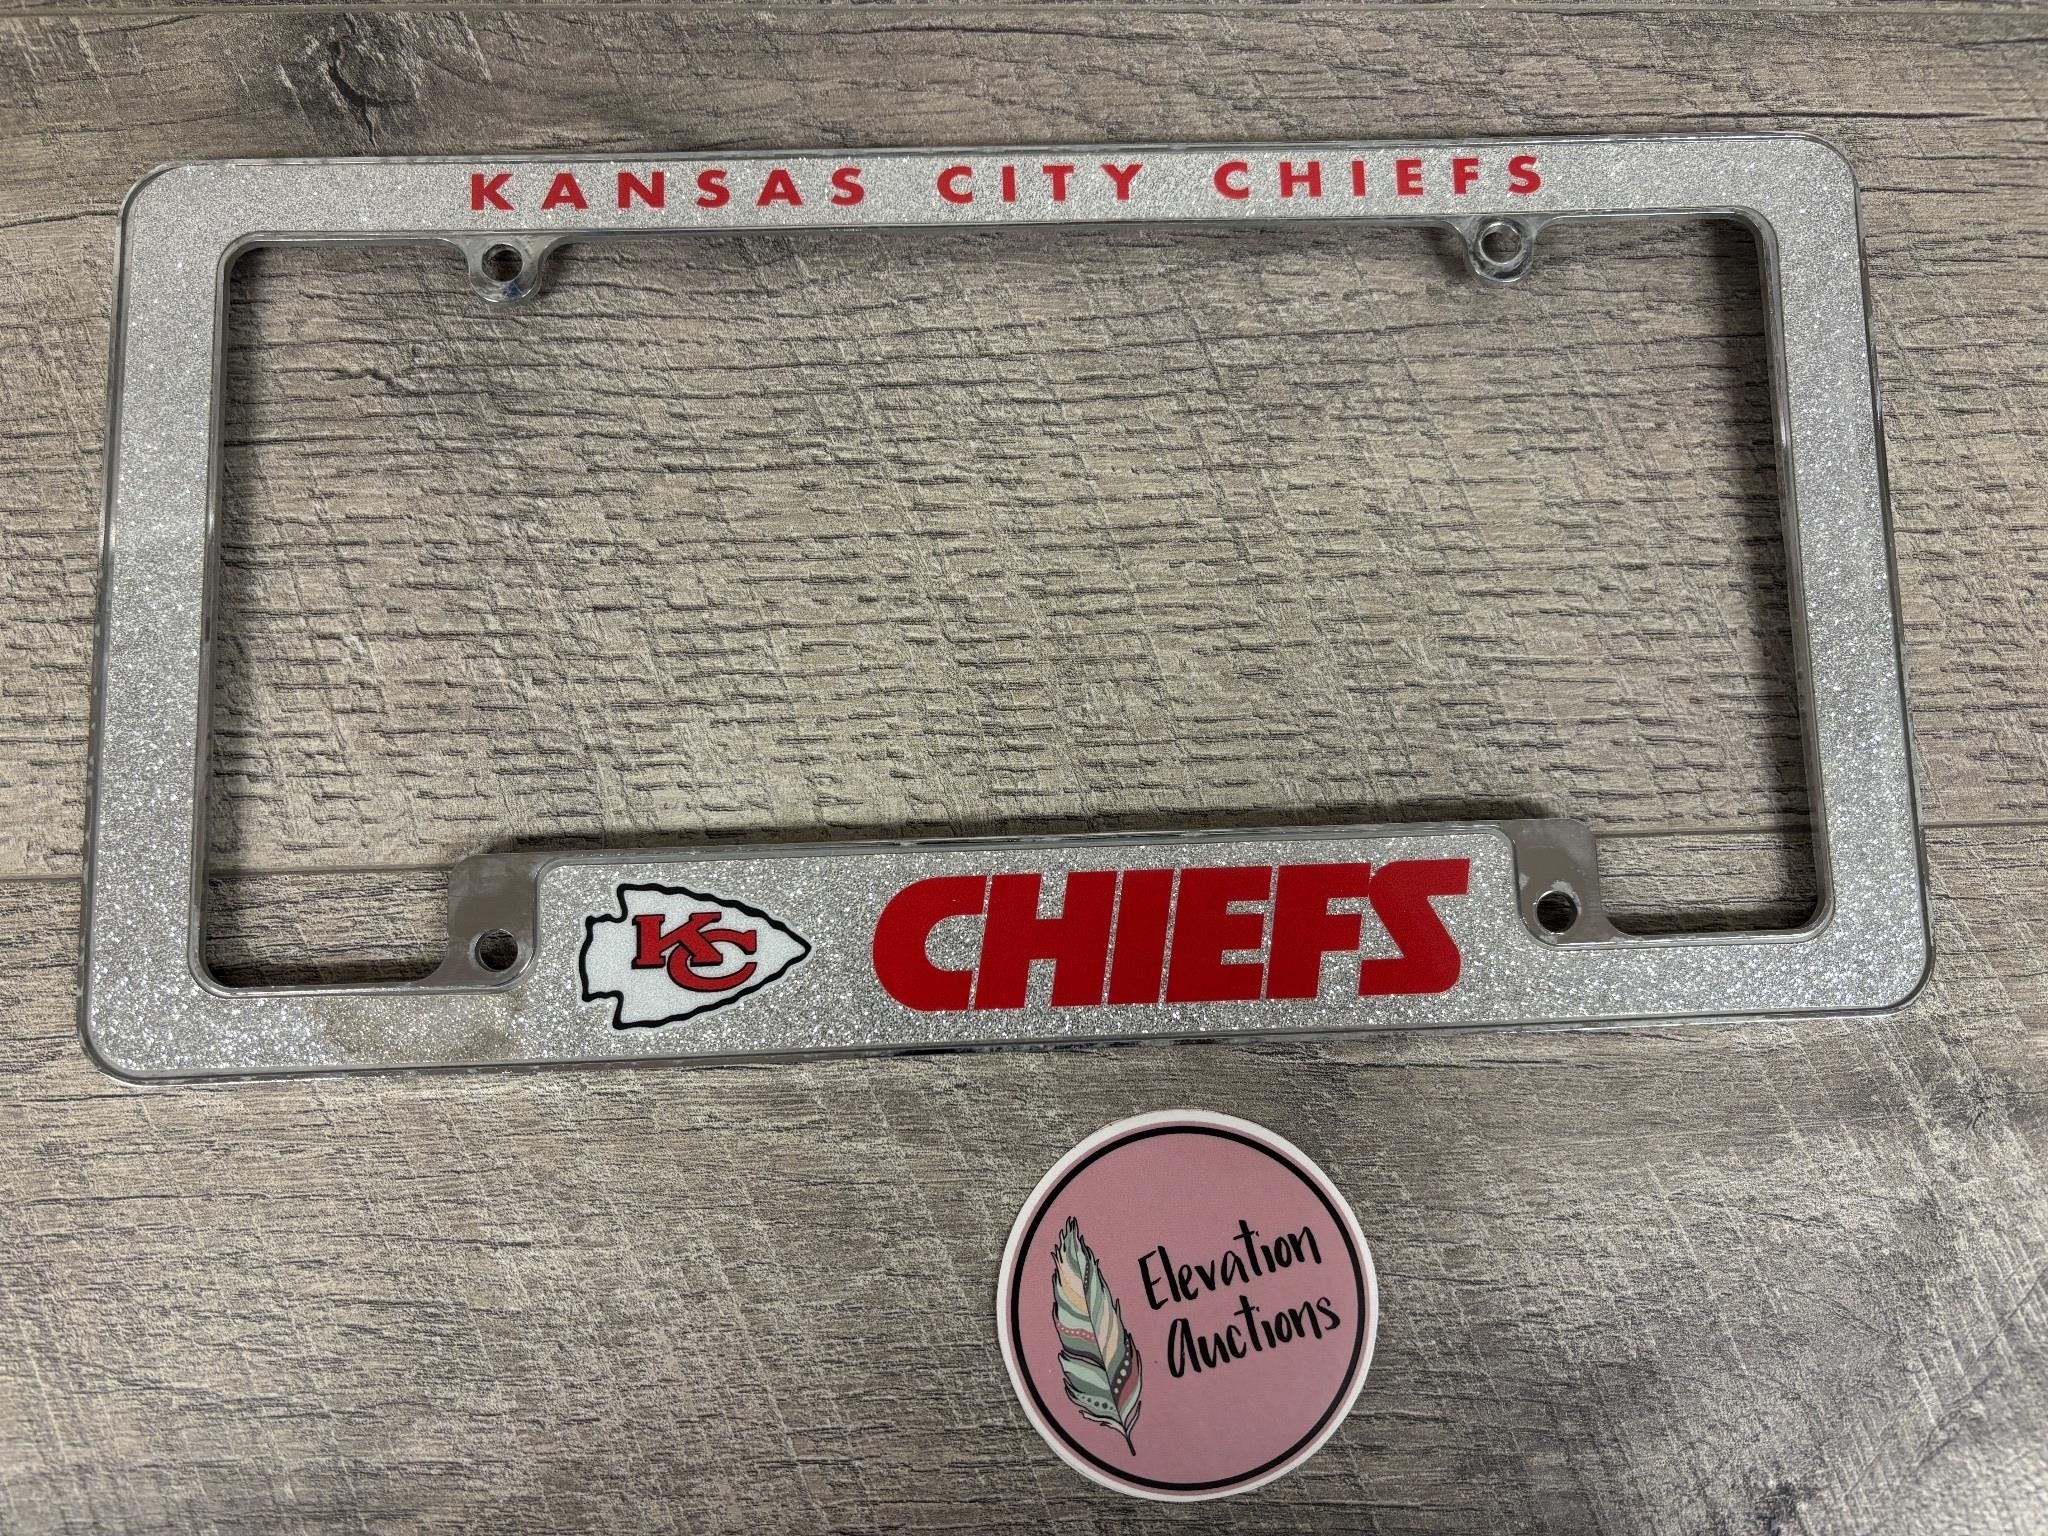 Kansas City Chiefs license plate frame